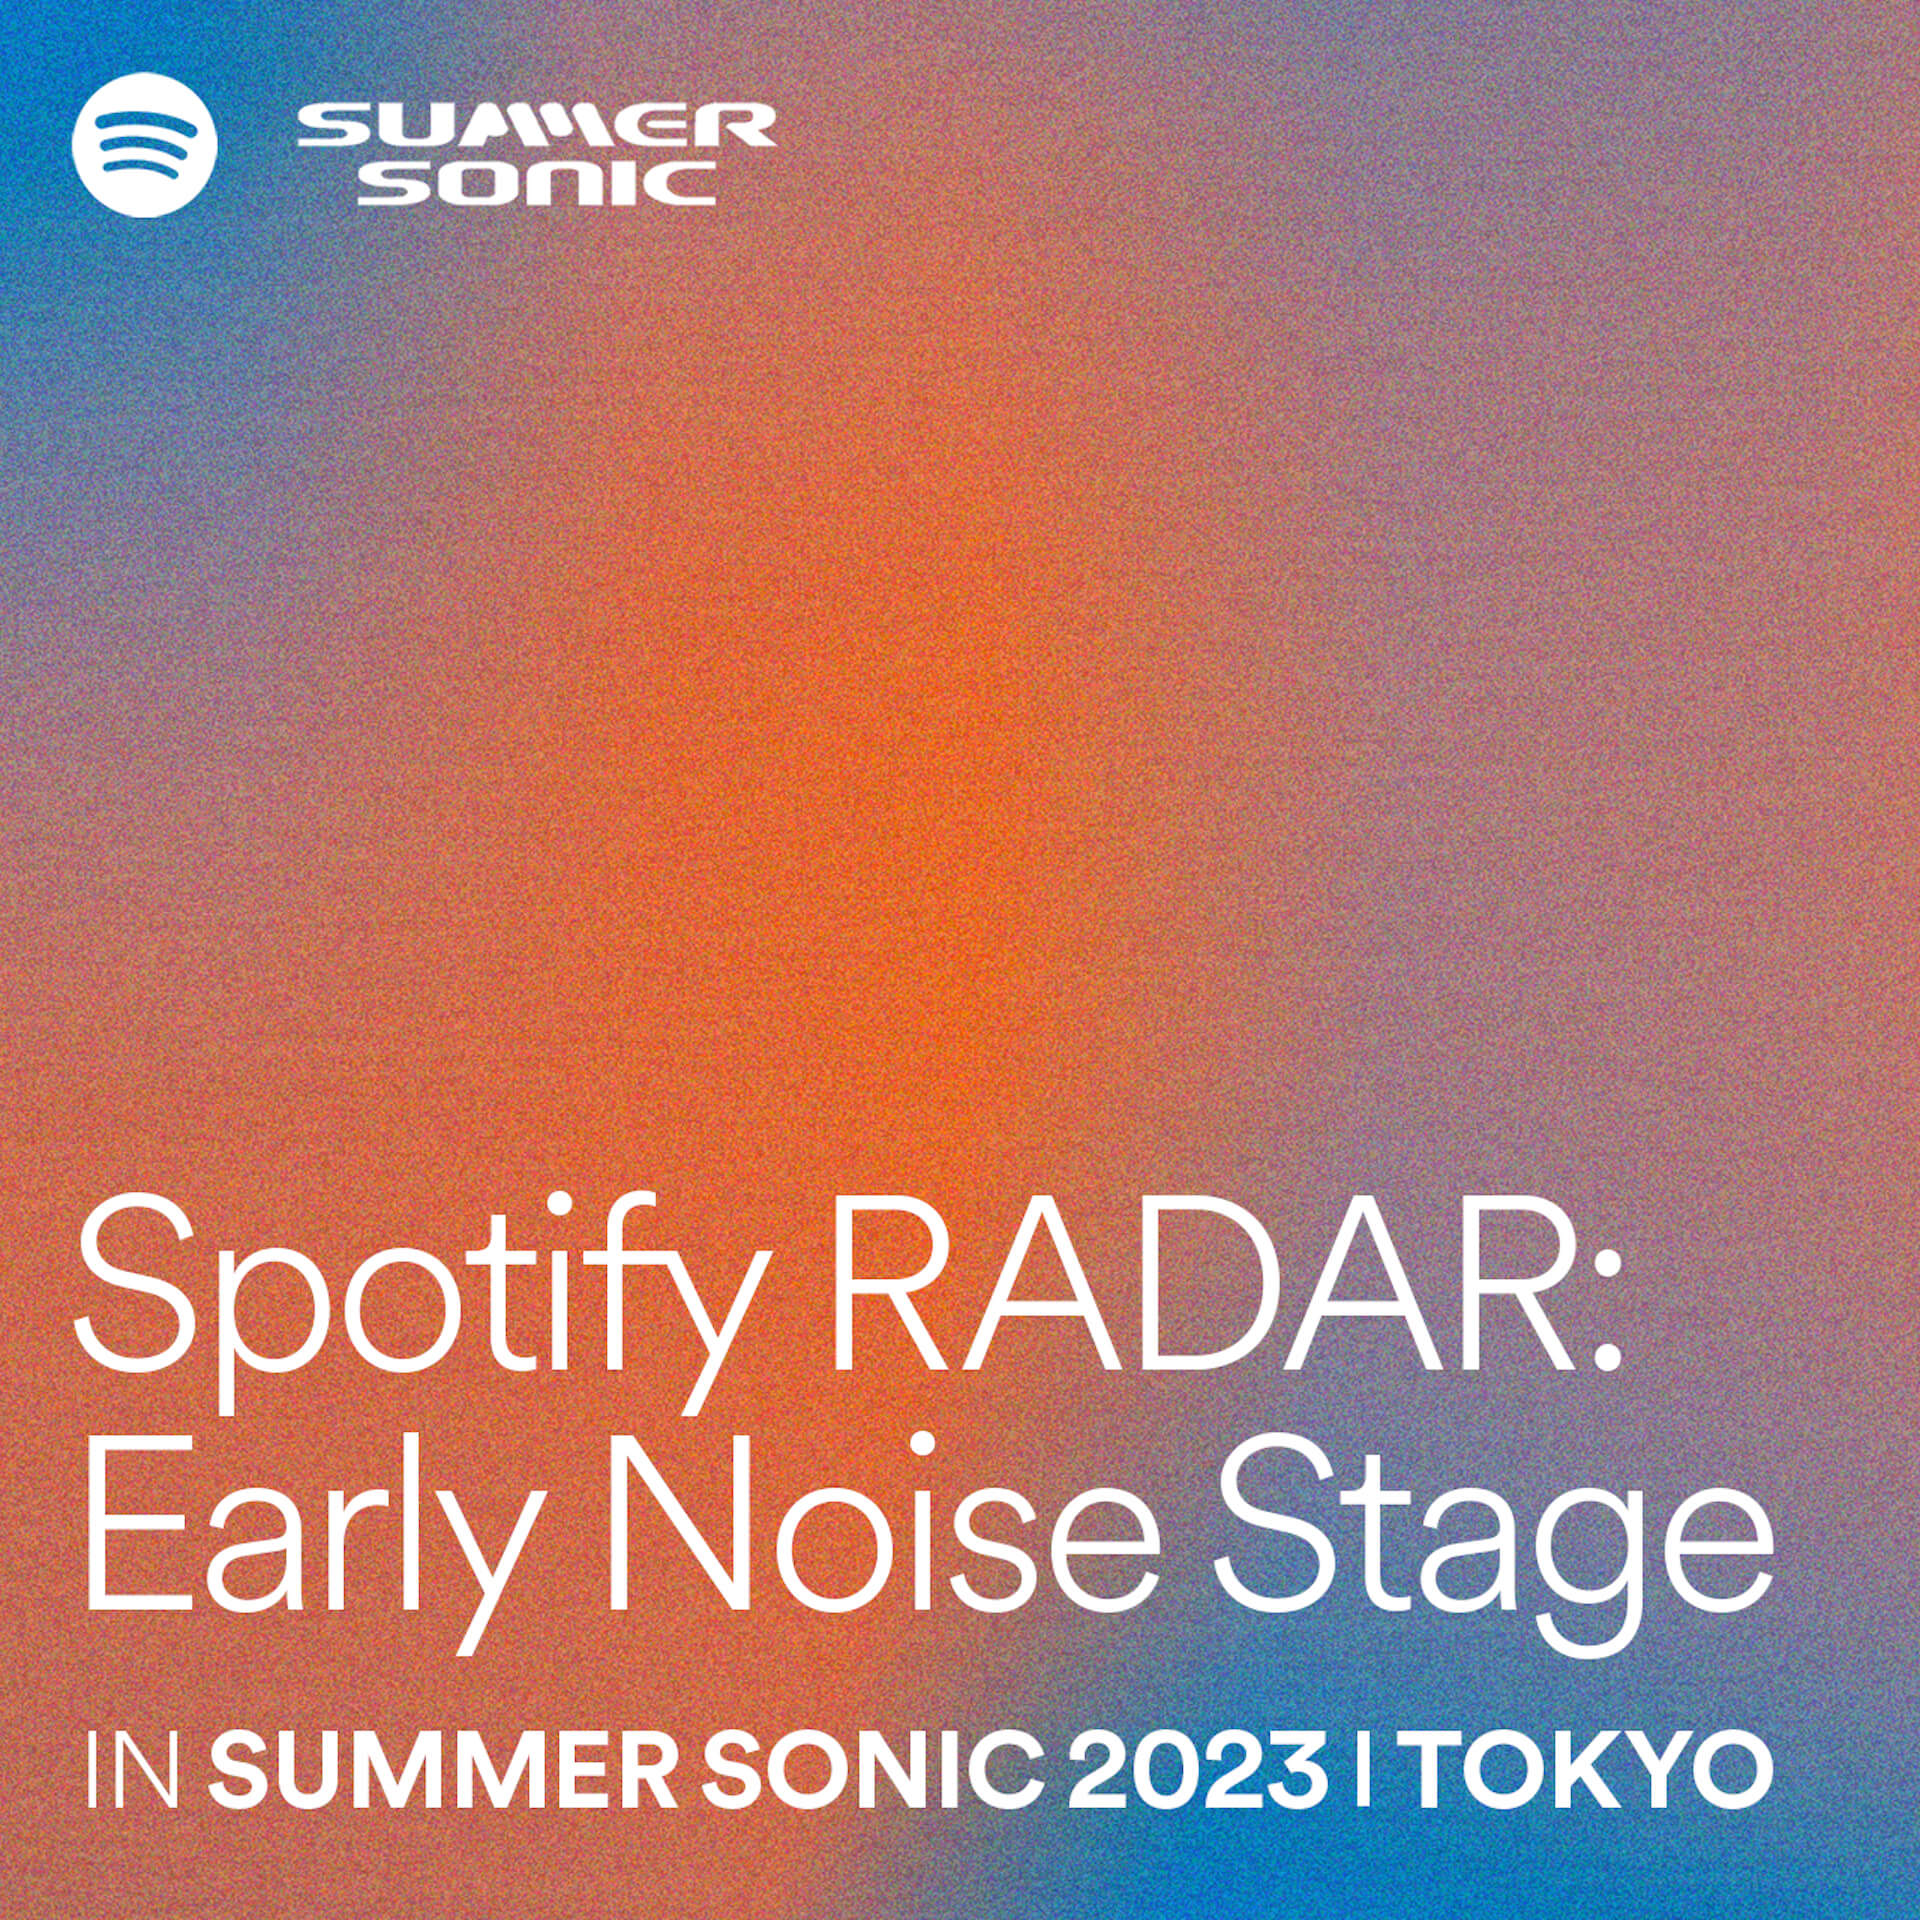 SUMMER SONIC 2023 Spotify RADAR